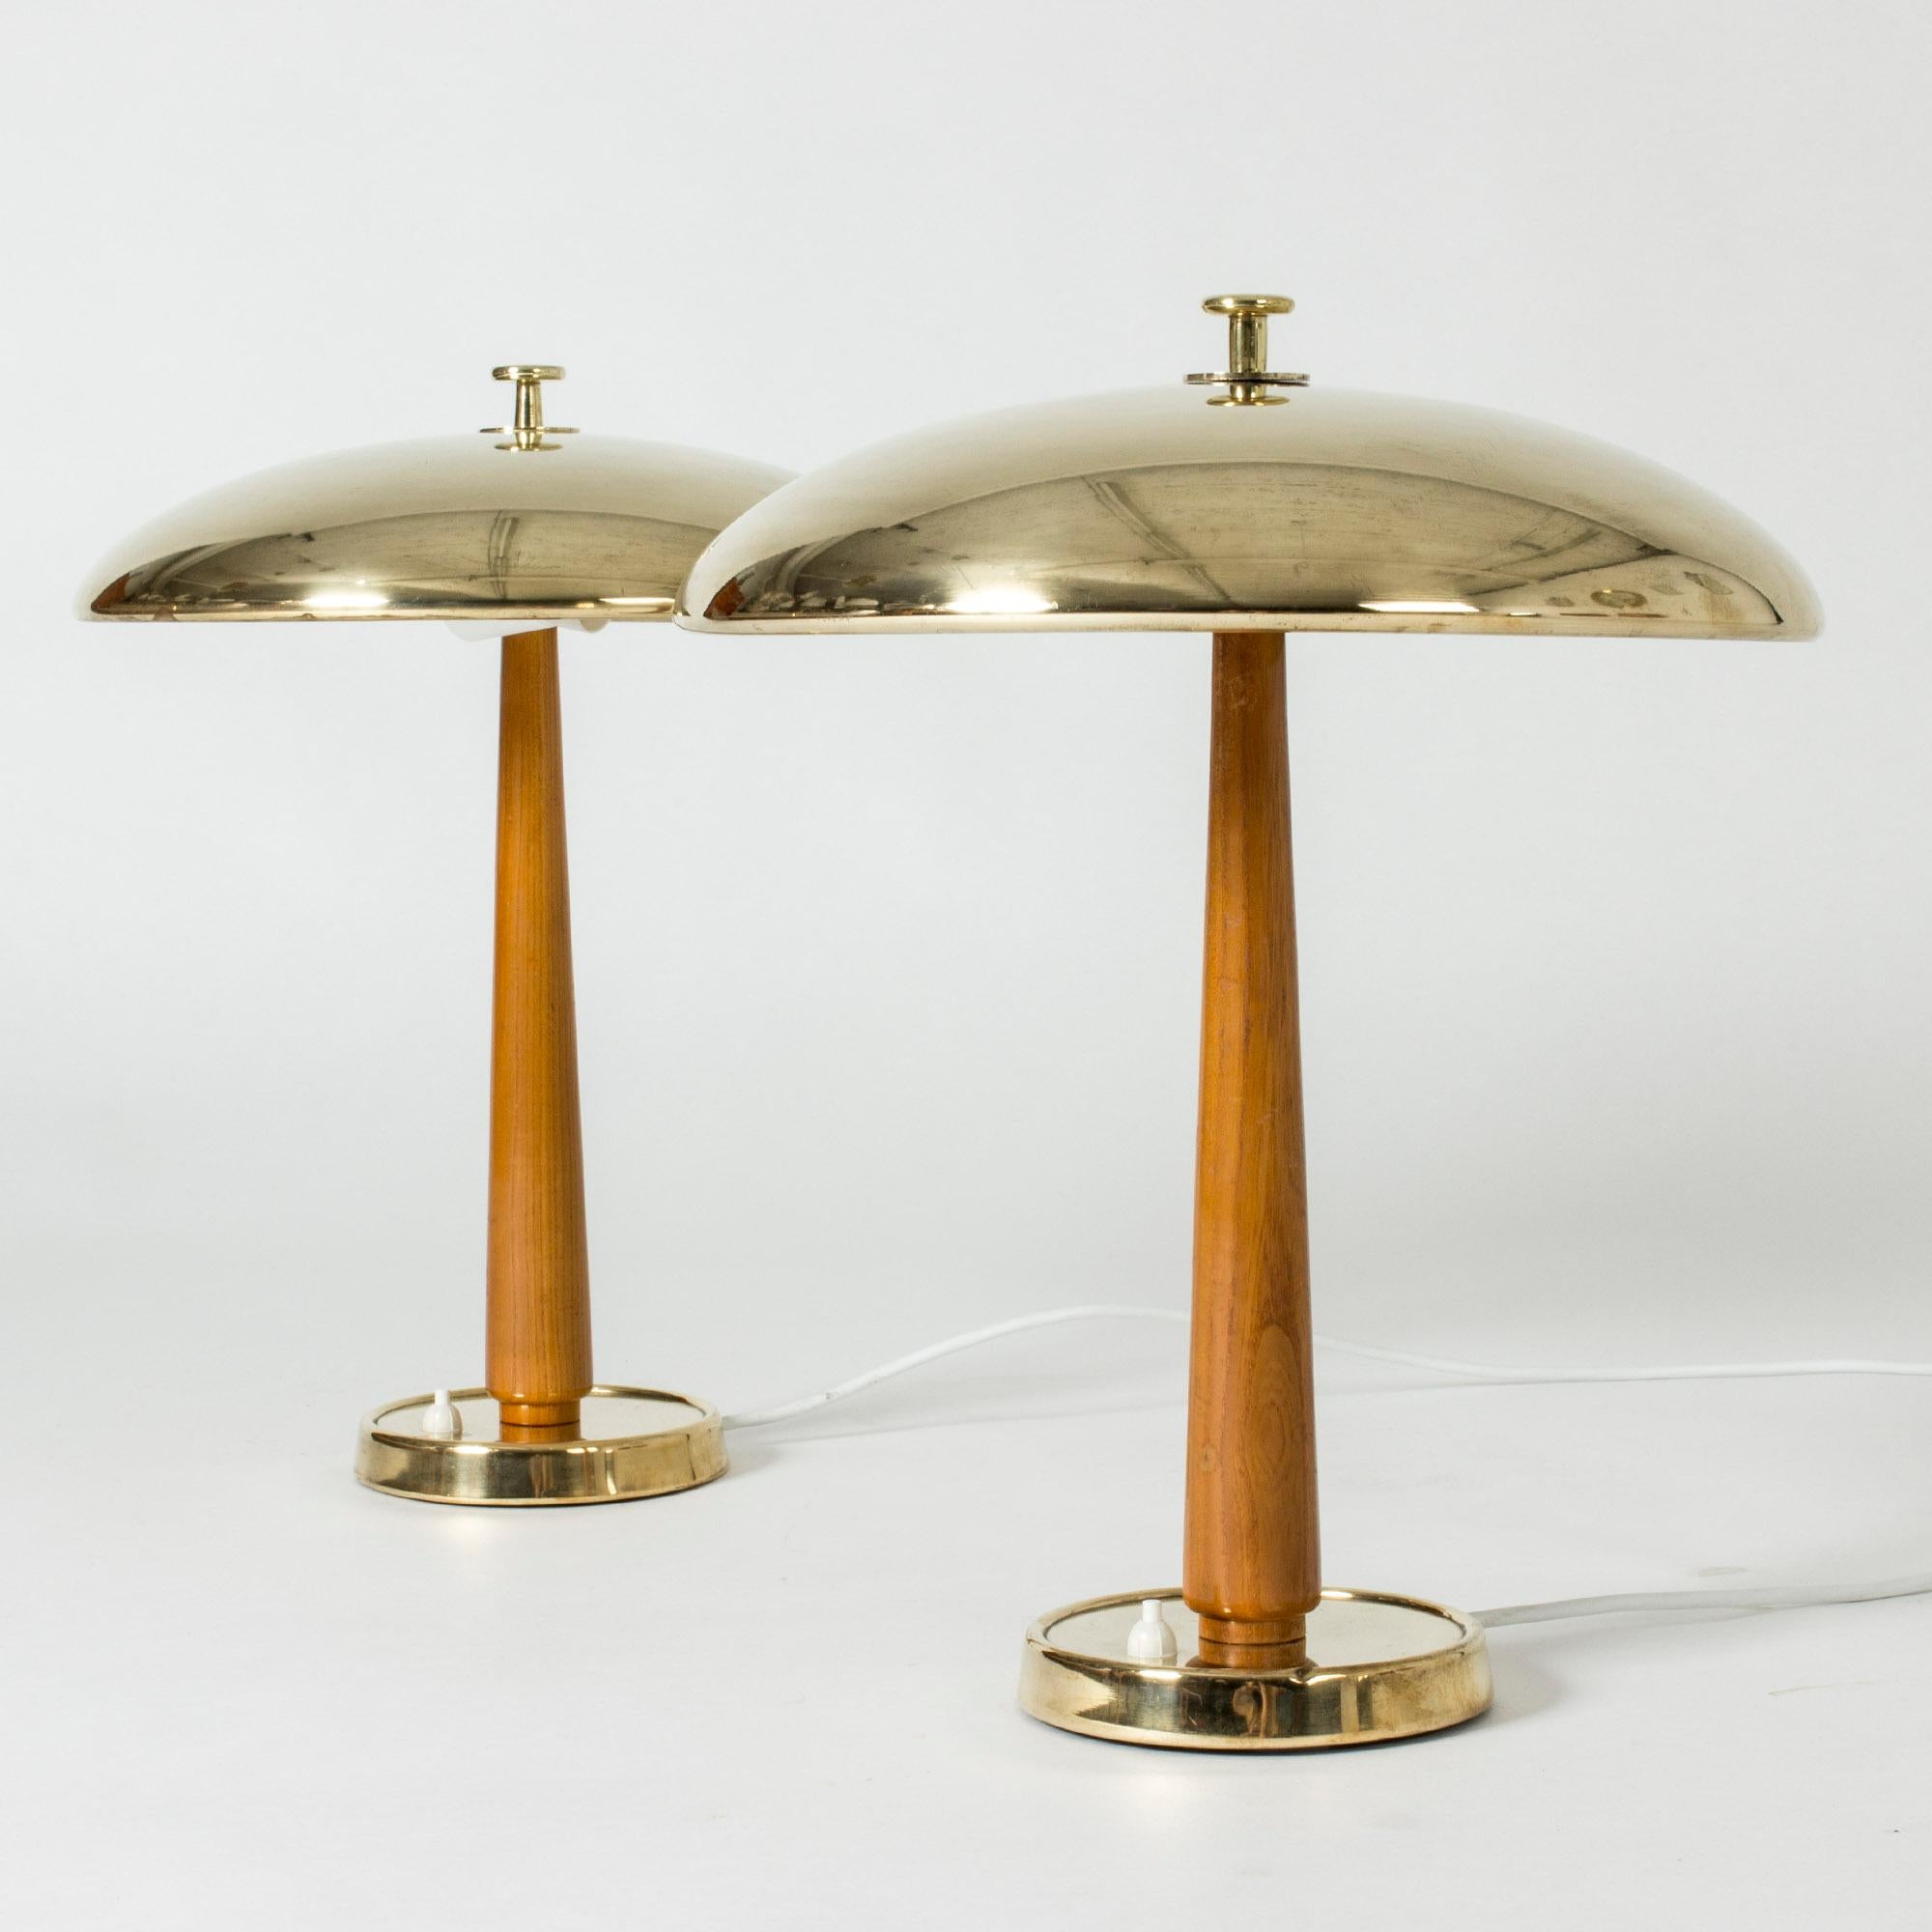 Scandinavian Modern Pair of Swedish Modern Brass and Wood Table Lamps from Nordiska Kompaniet